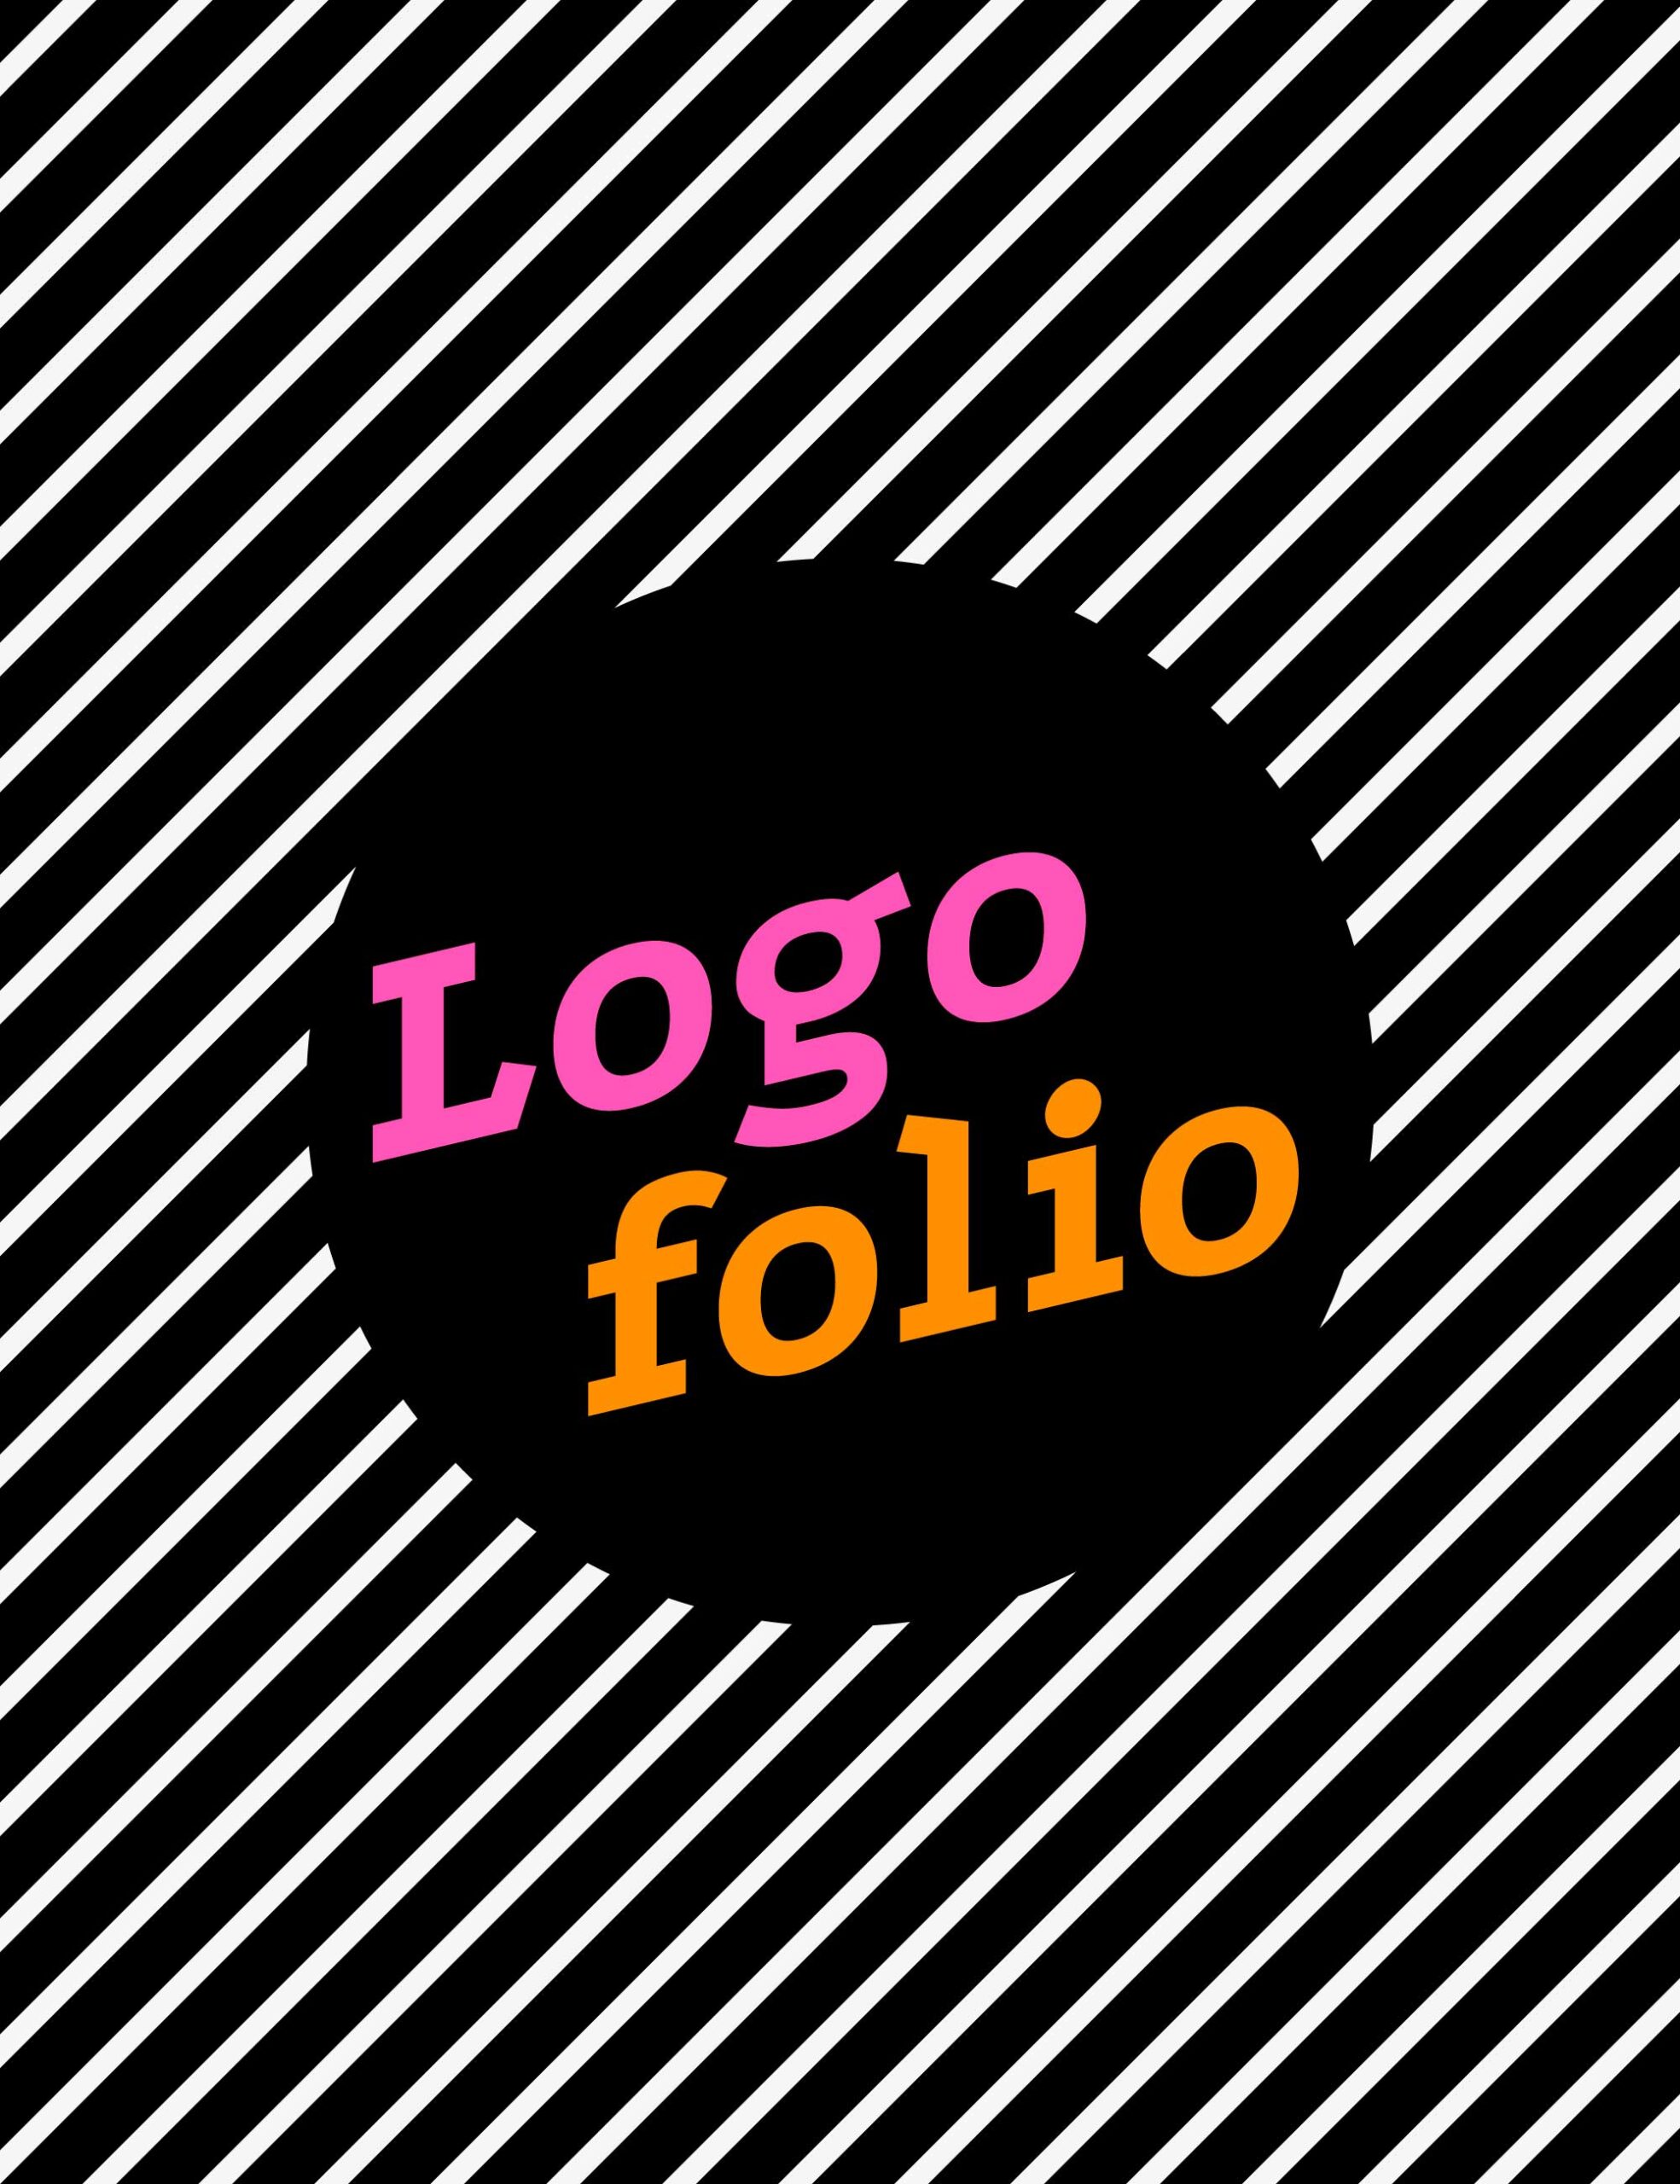 The Project Black Logofolio